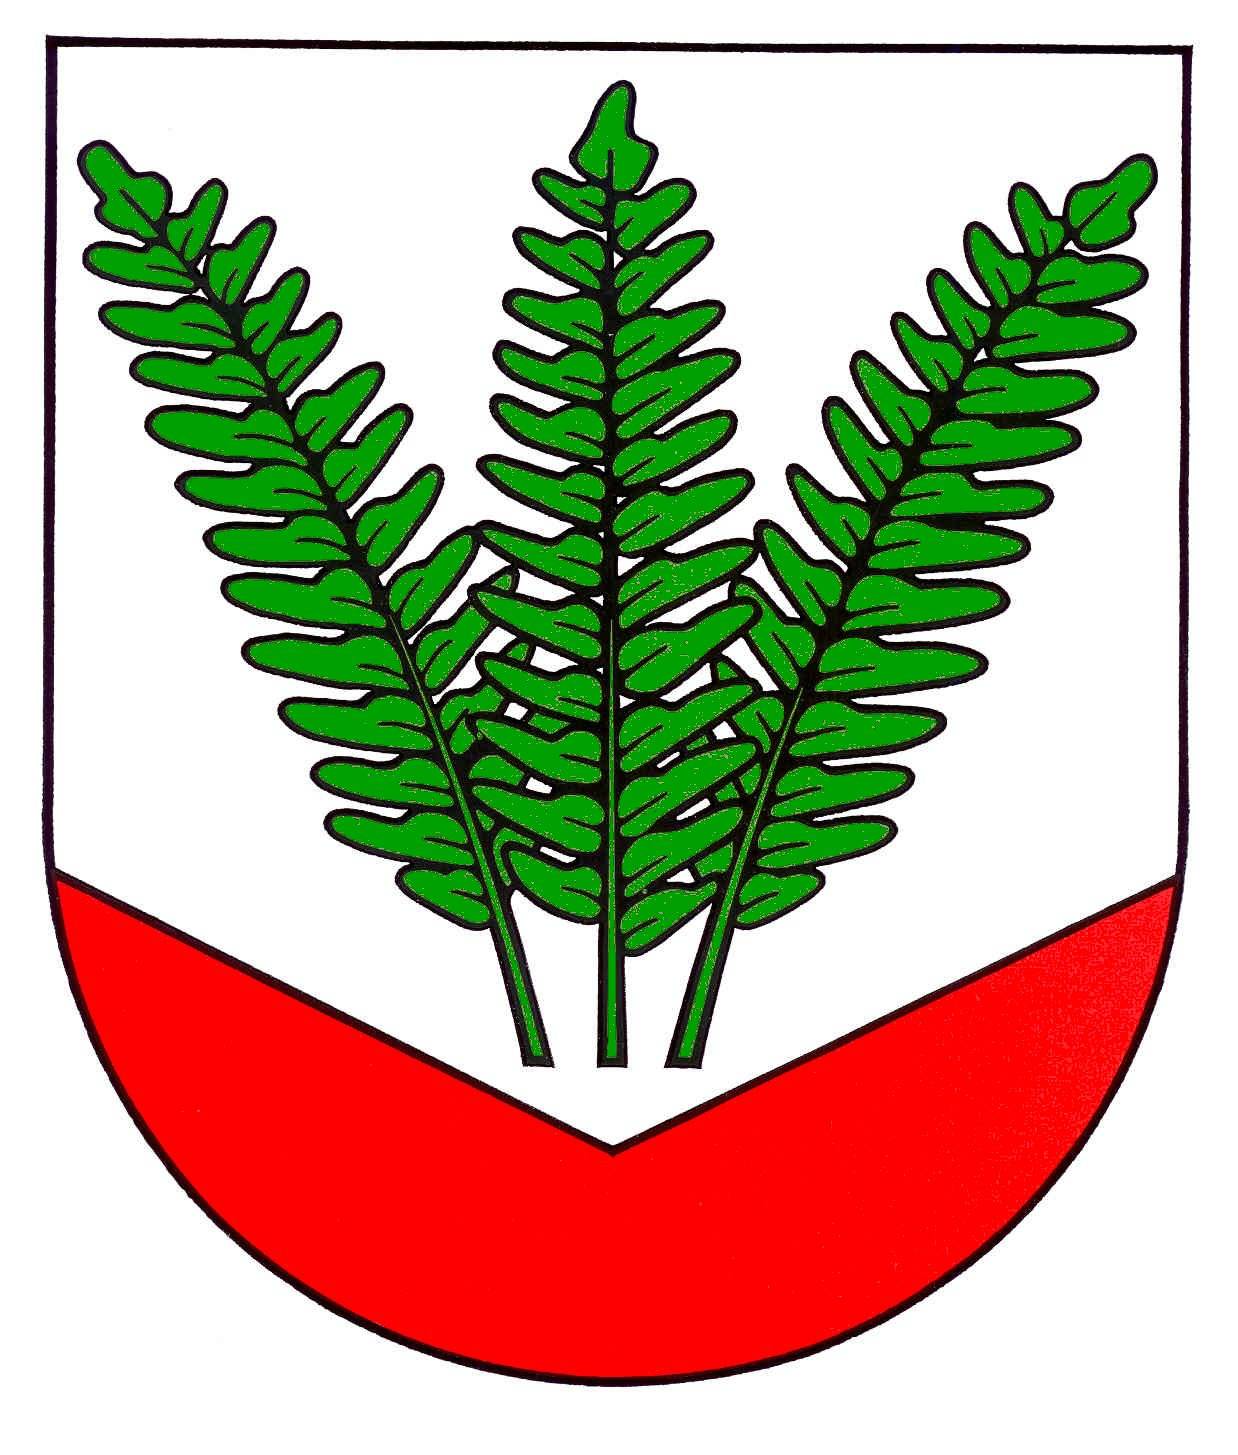 Wappen Gemeinde Fahrenkrug, Kreis Segeberg